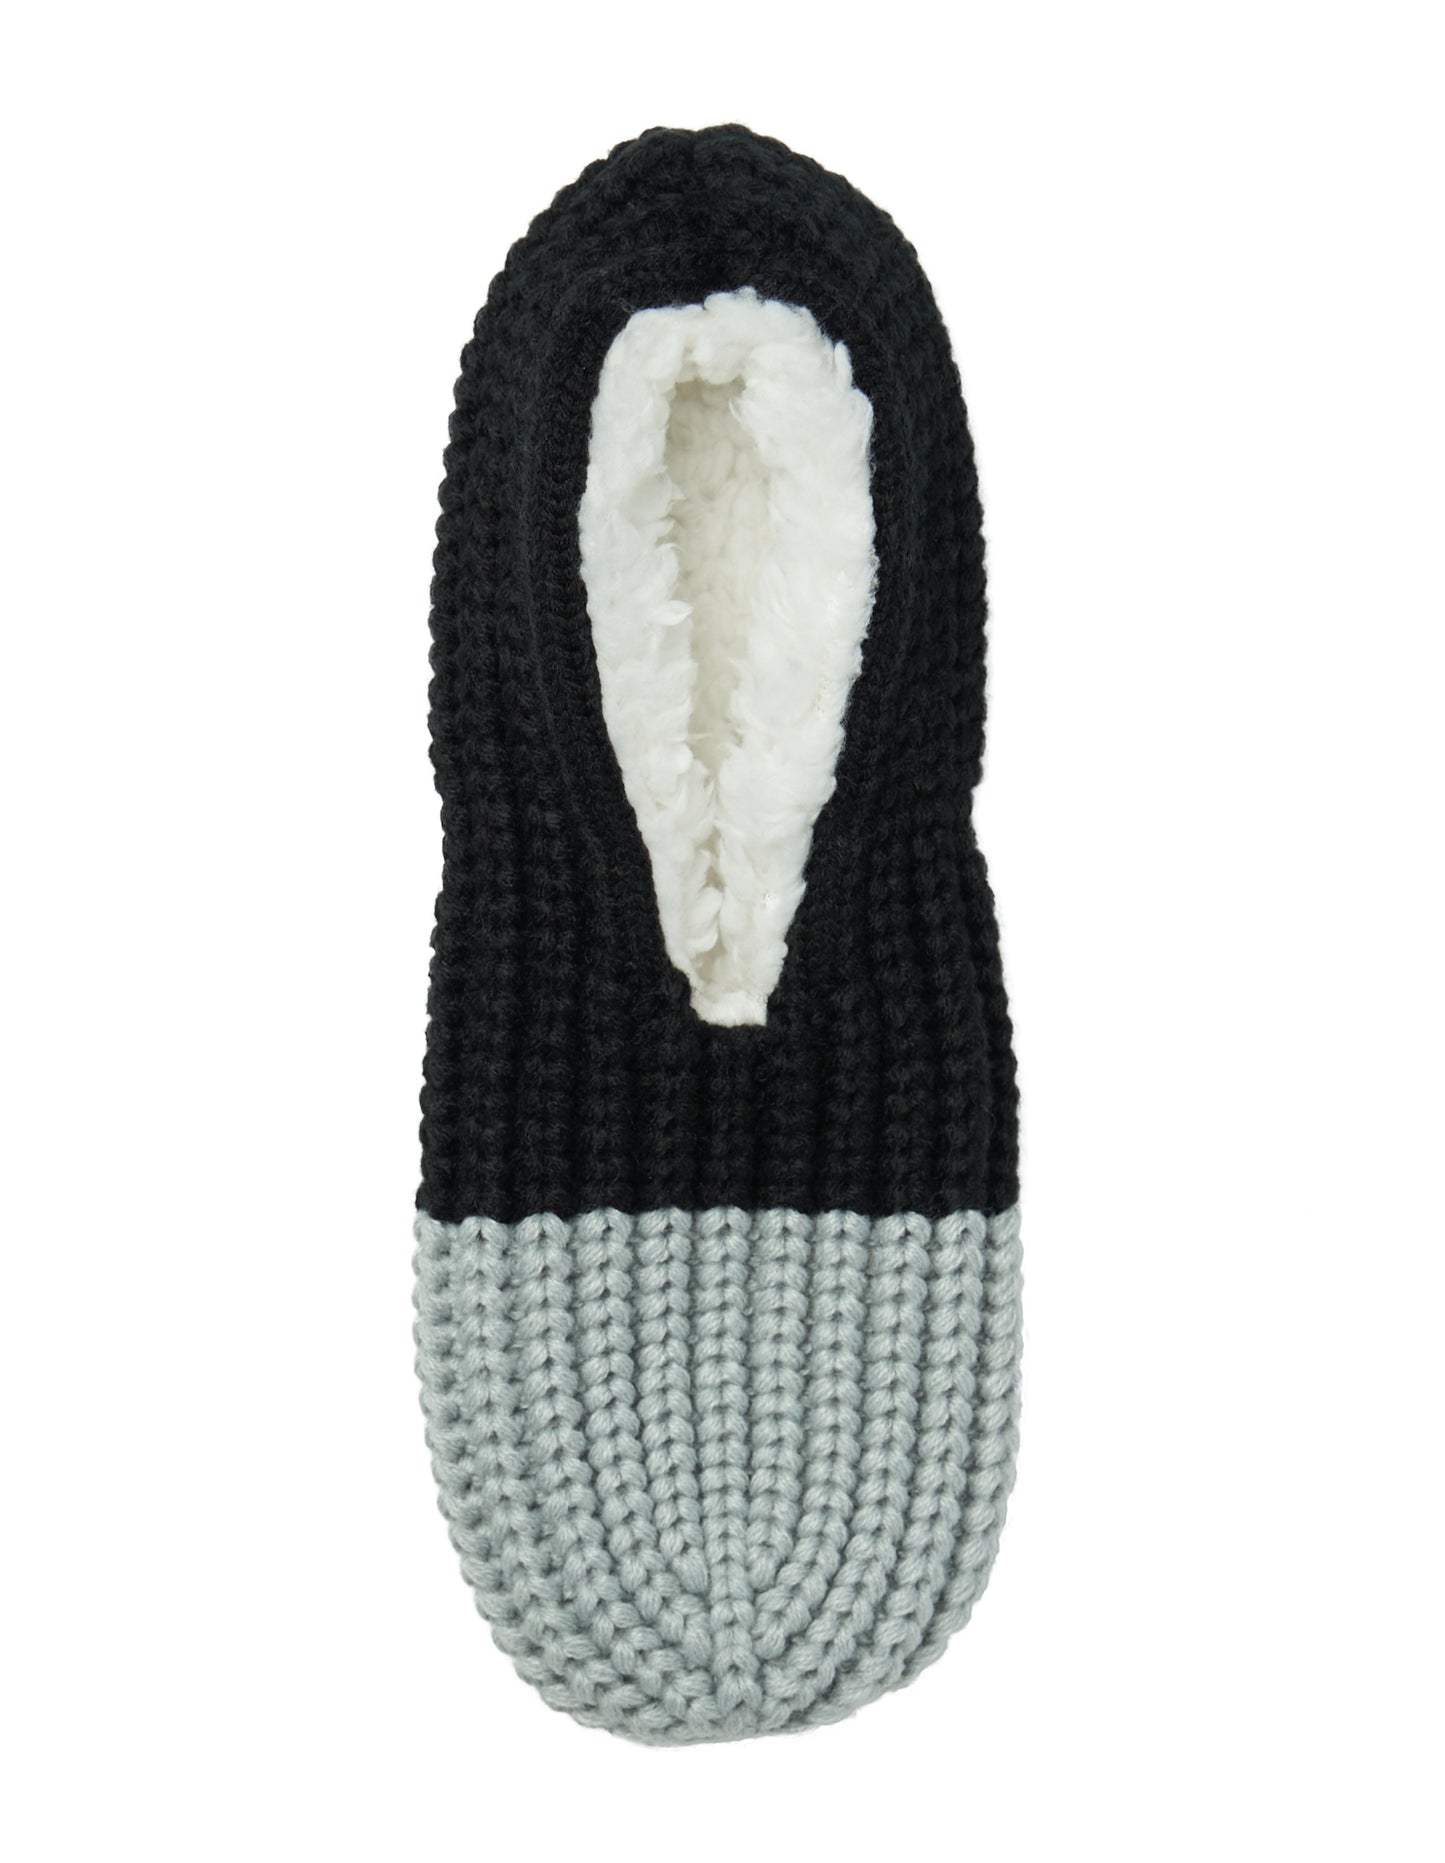 Top of Simon de Winter Women's Slipper Home Socks in Black/Cloud Grey